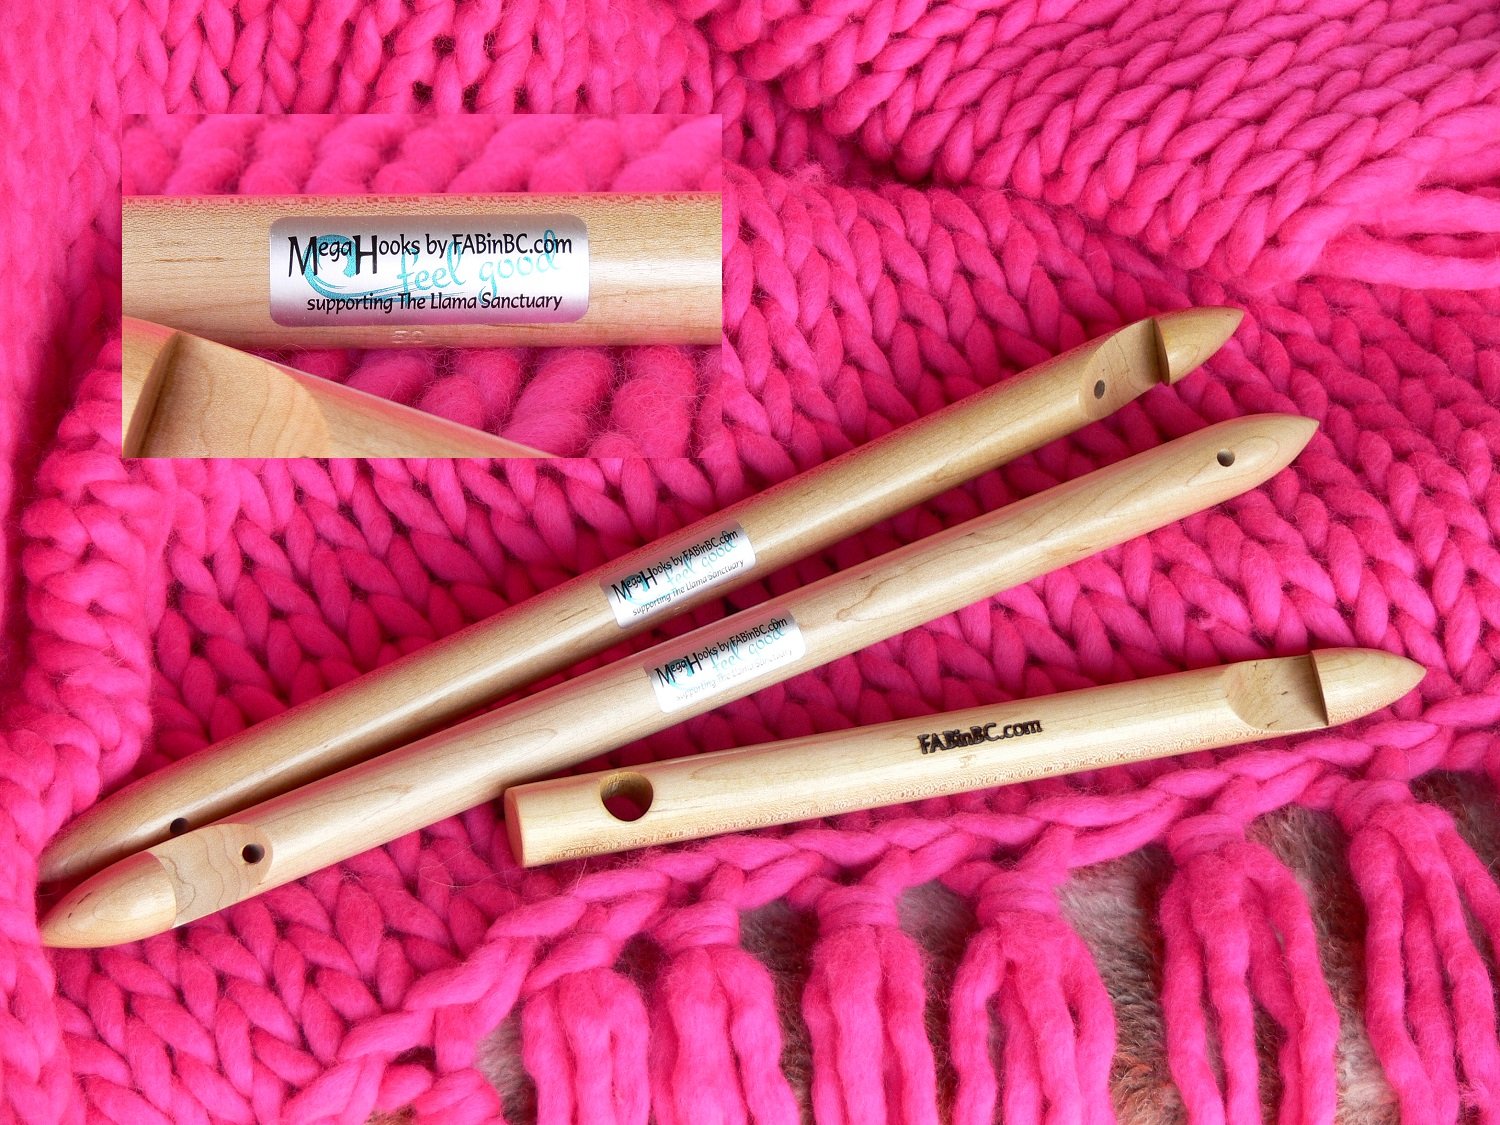 handcrafted jumbo-sized knitting needles and yarn tools